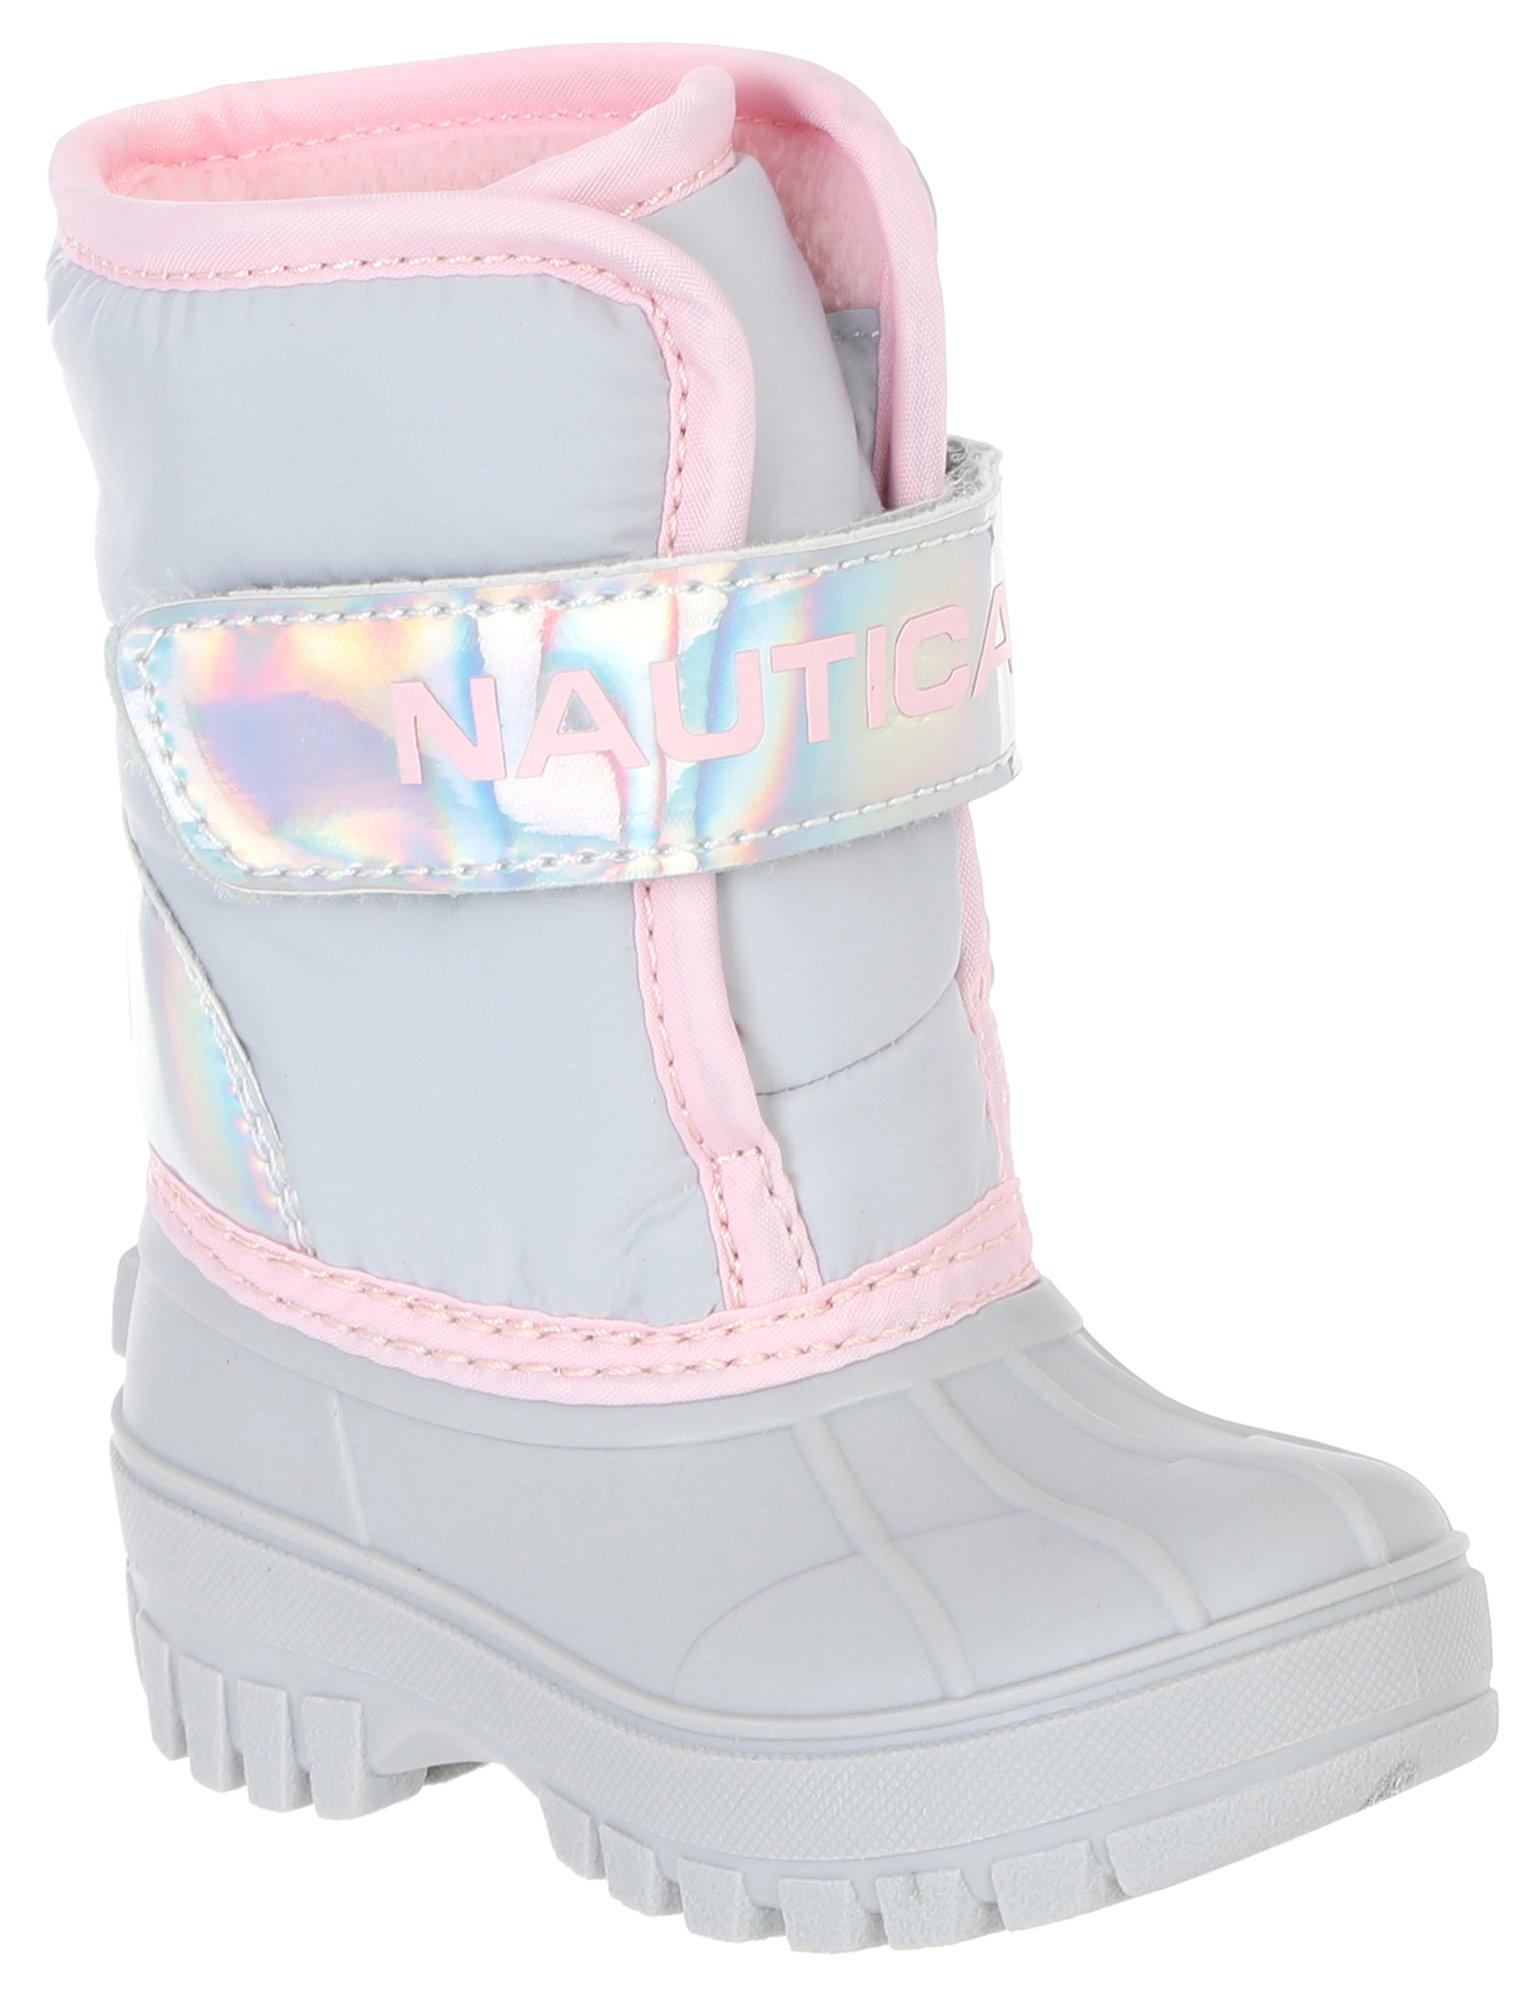 Toddler Girls Winter Boots